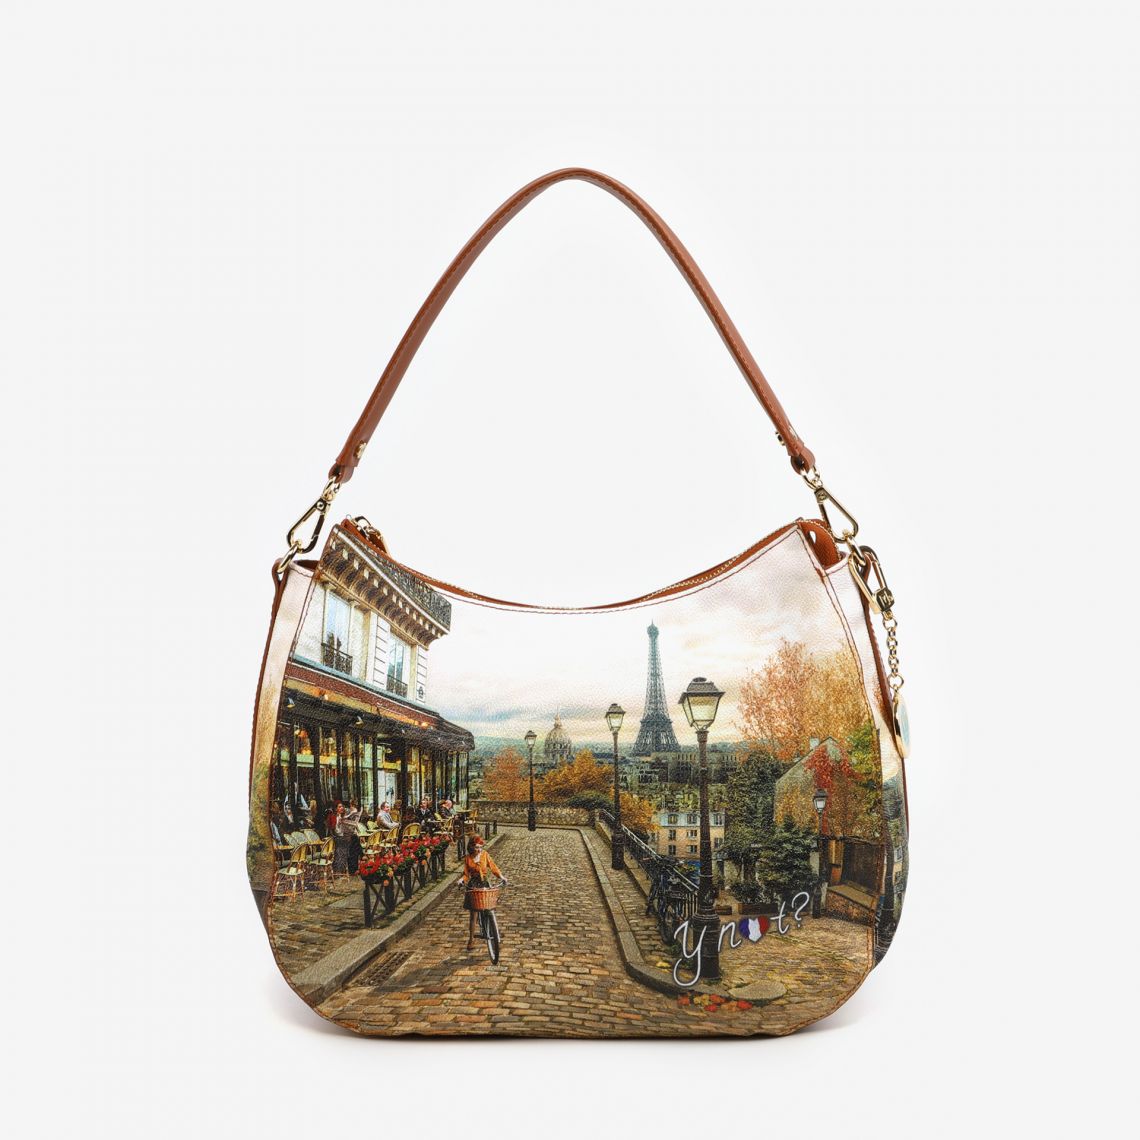 Economici Online Hobo Romantic Paris borse bag in offerta